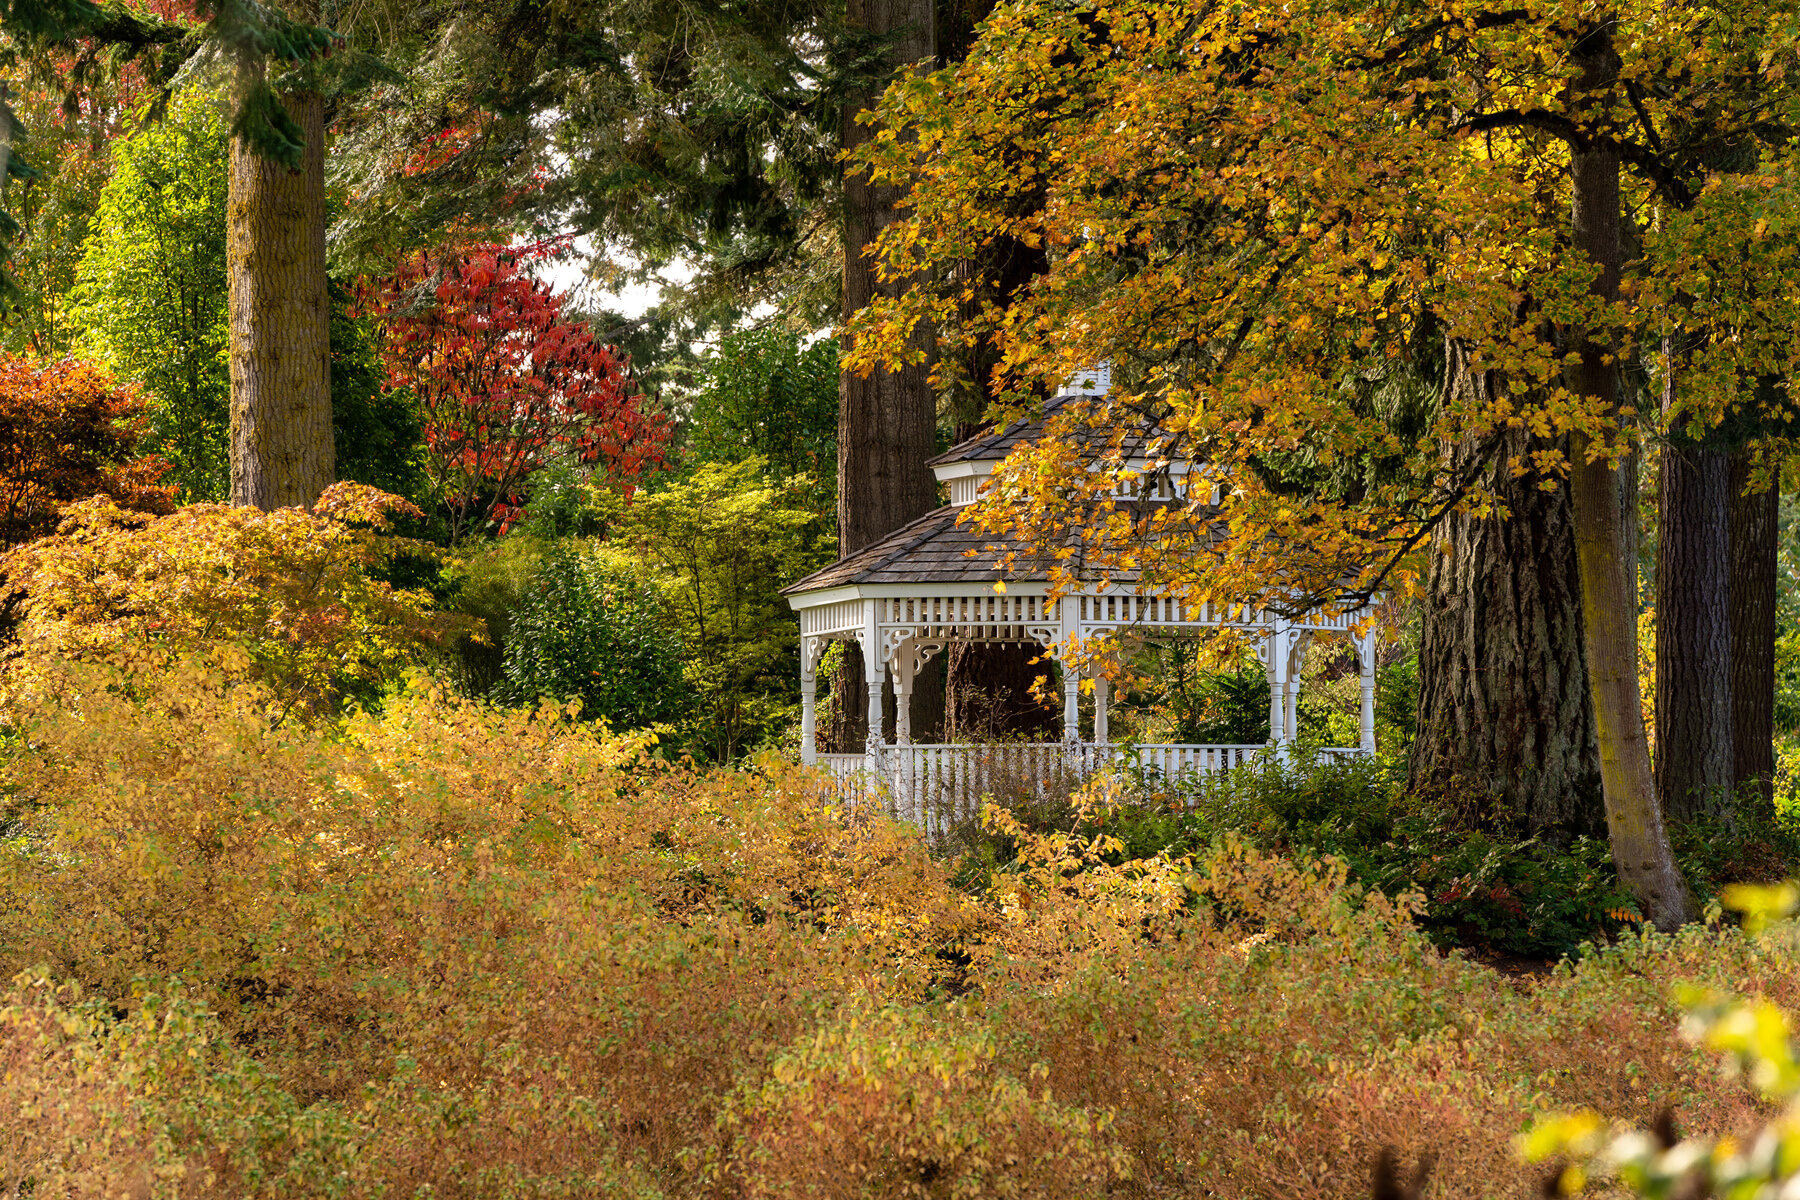 003_Oakwood Gardens_Fall Color Garden_Photography by Wasim Muklashy.jpg